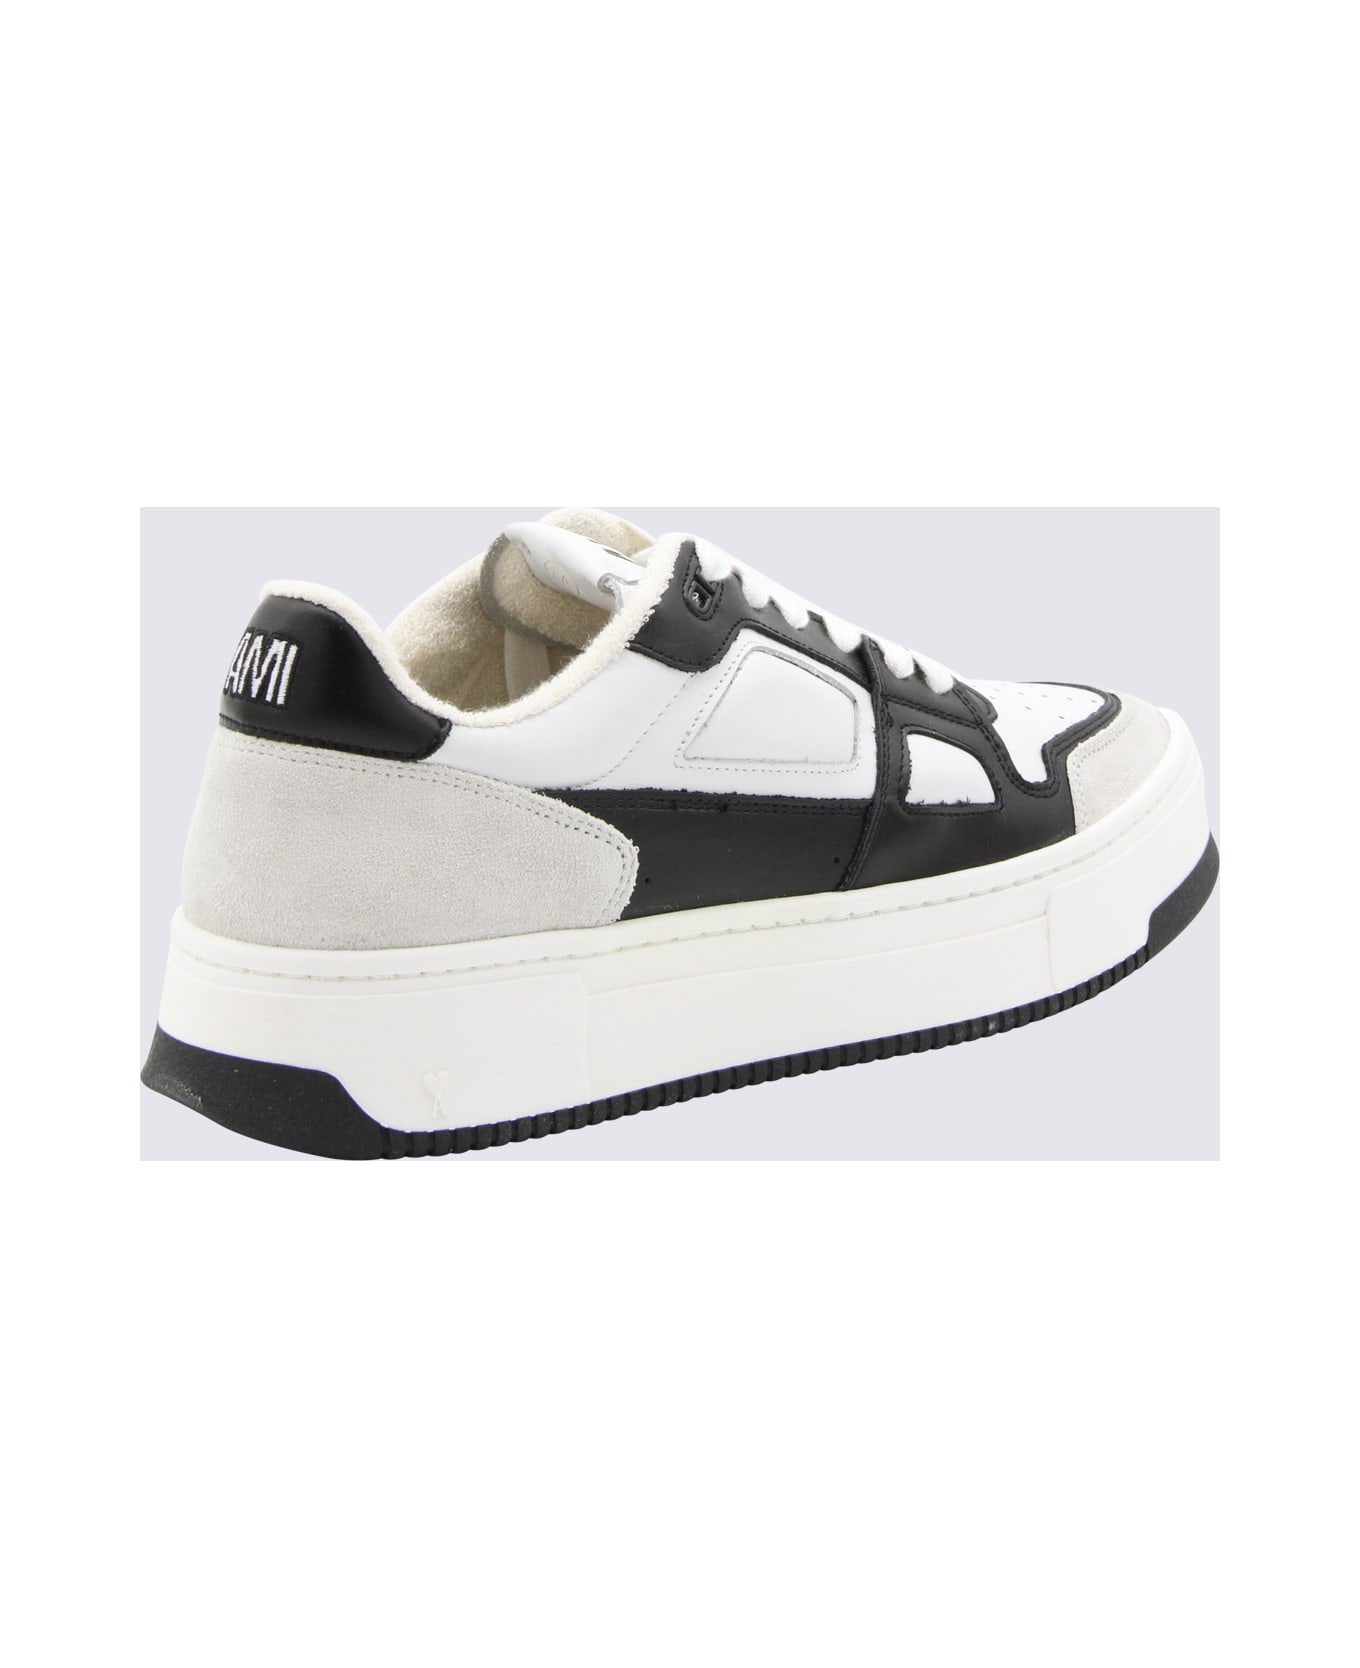 Ami Alexandre Mattiussi Black And White Leather Arcade Sneakers - White スニーカー